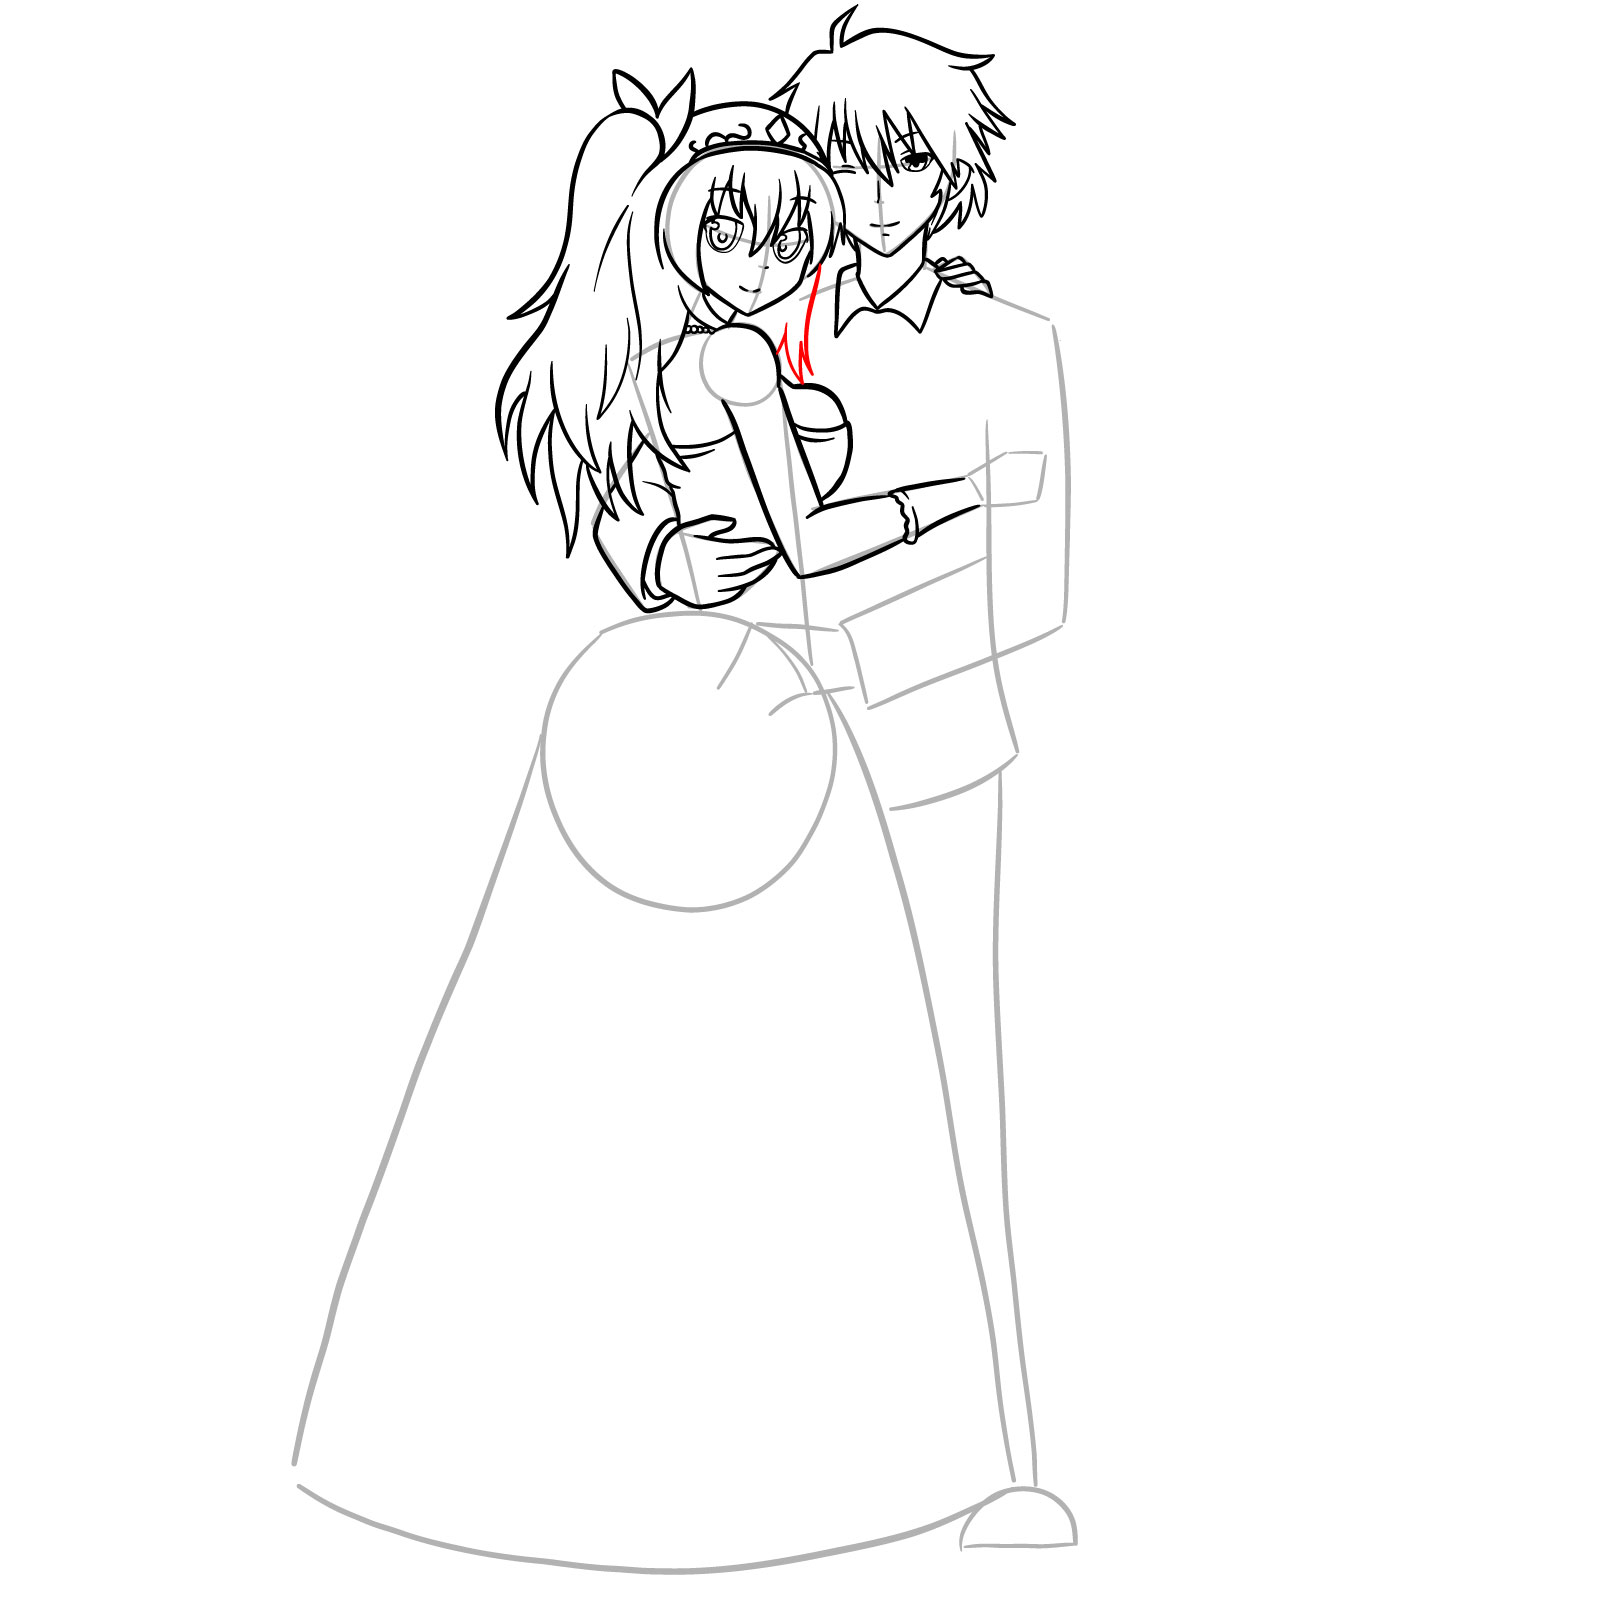 How to draw Ikki and Stella's wedding - step 36